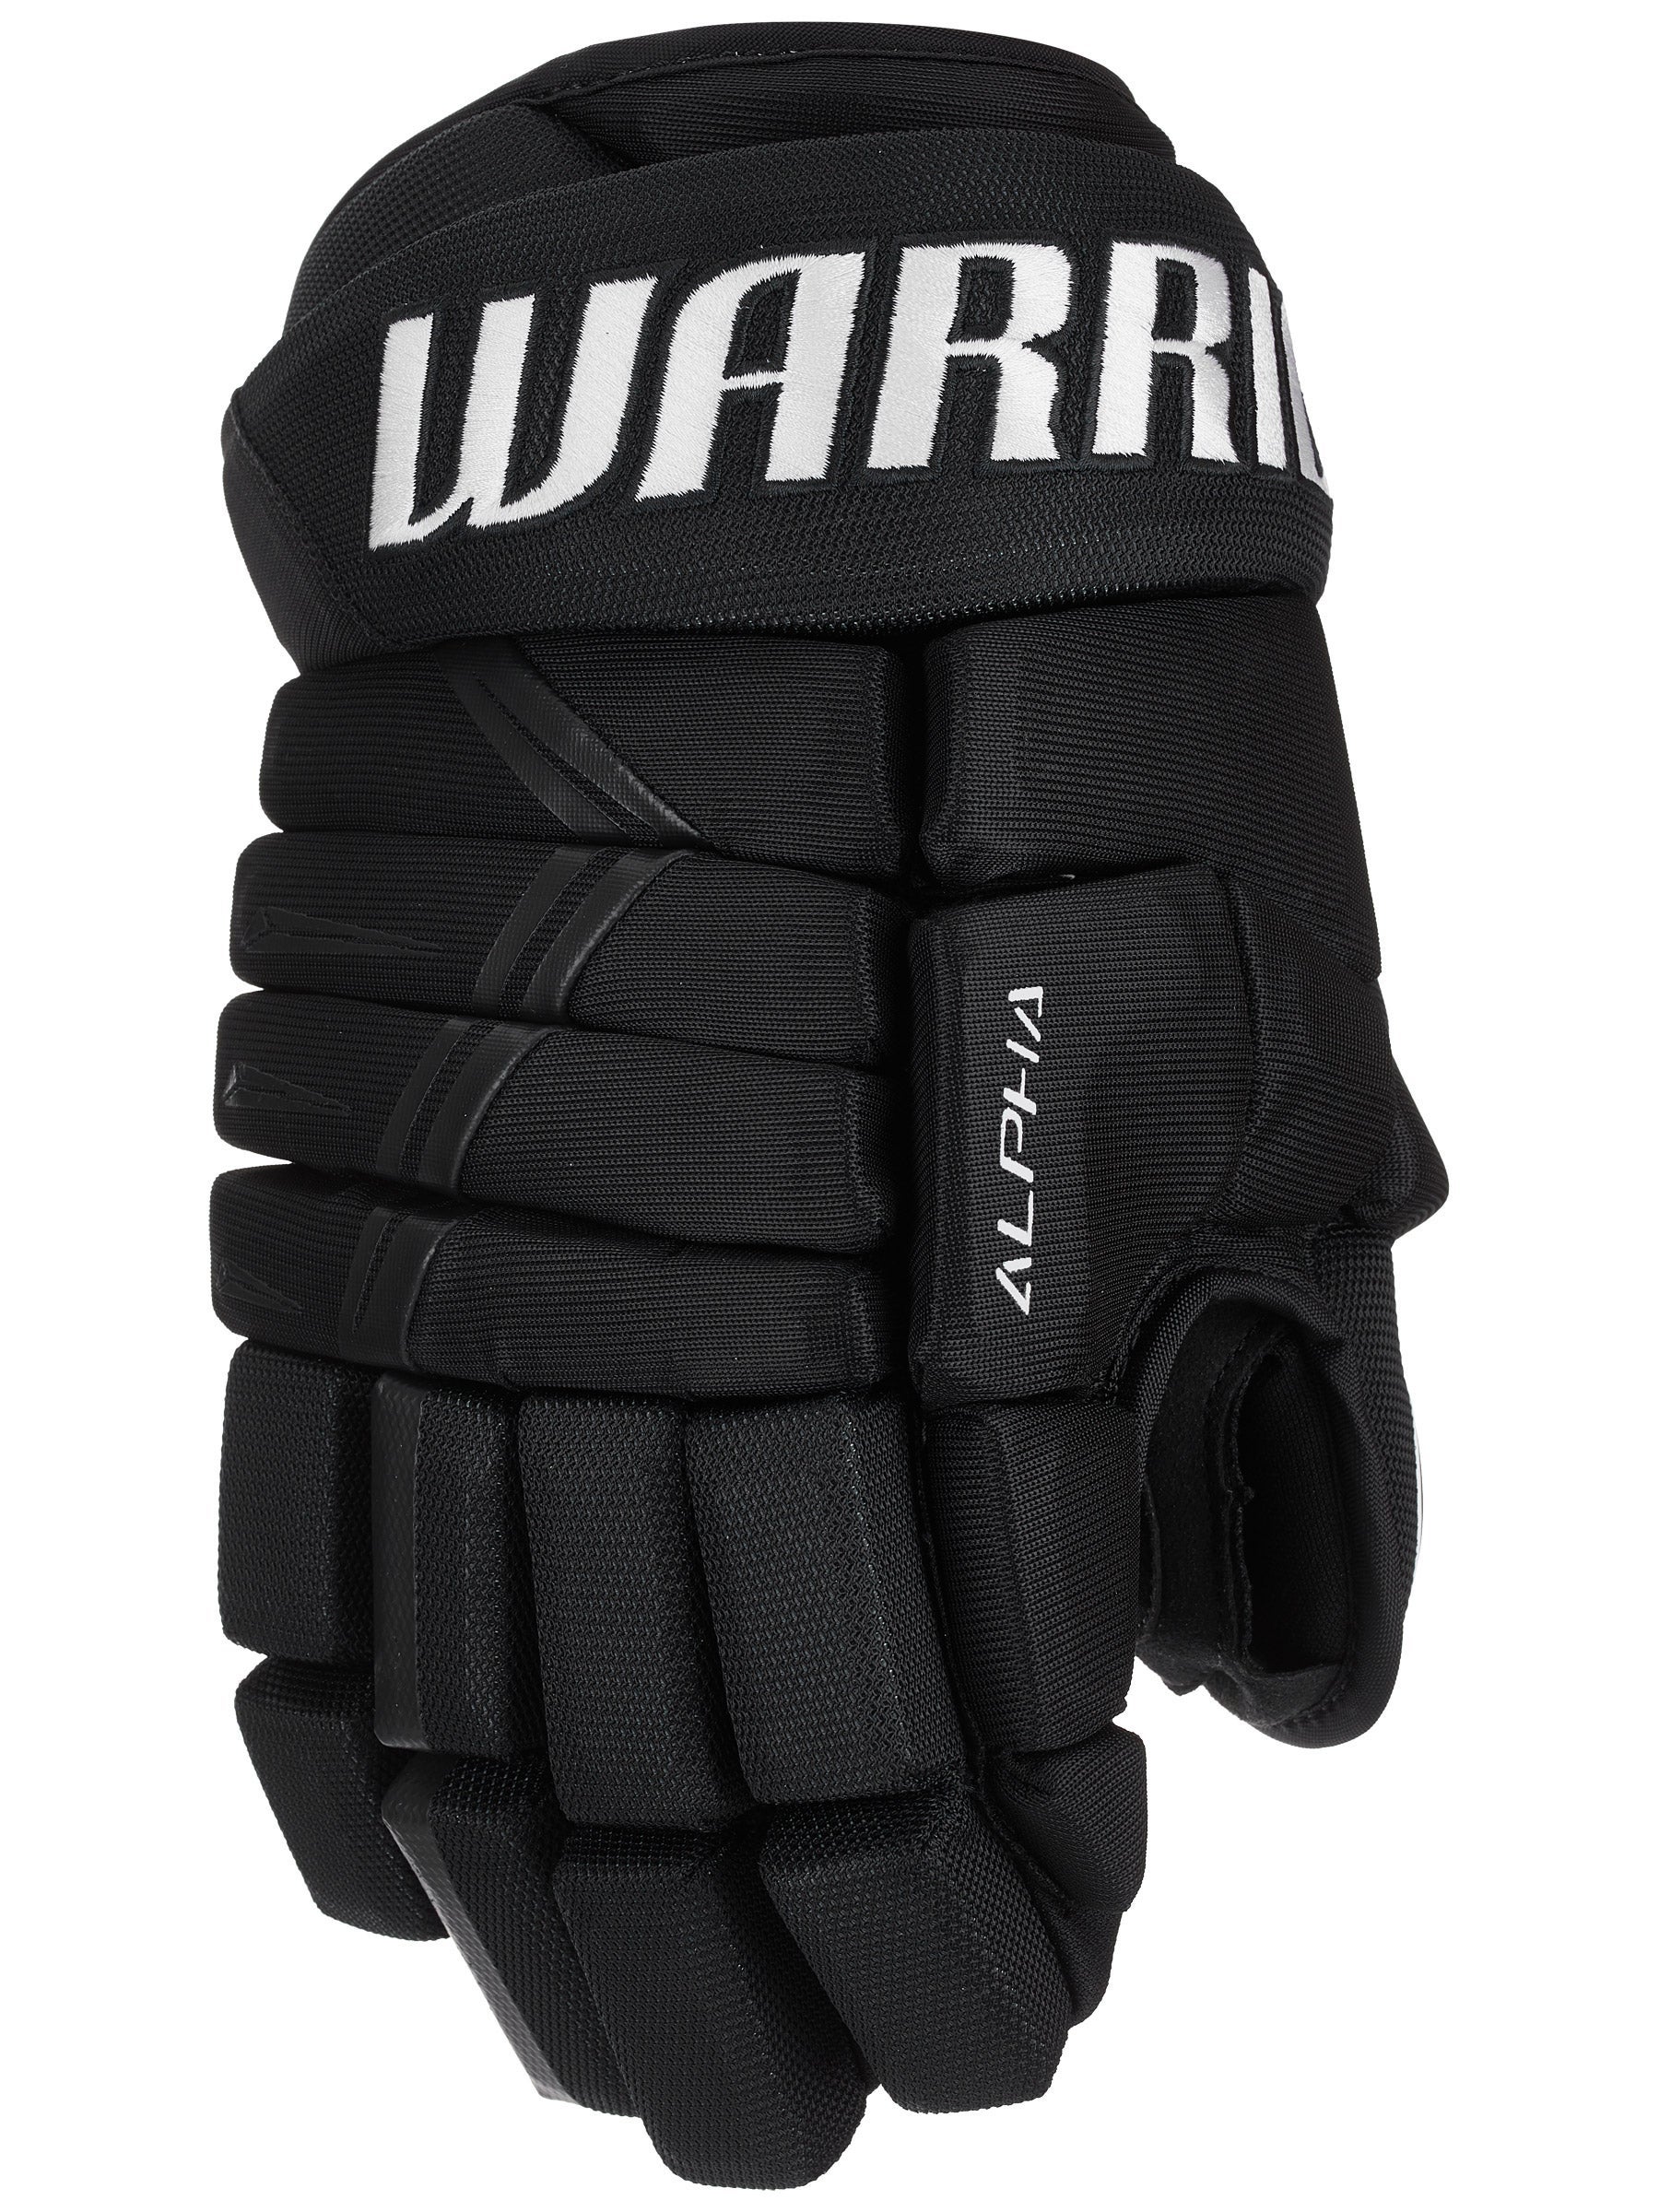 Warrior Player Youth Street Gloves 